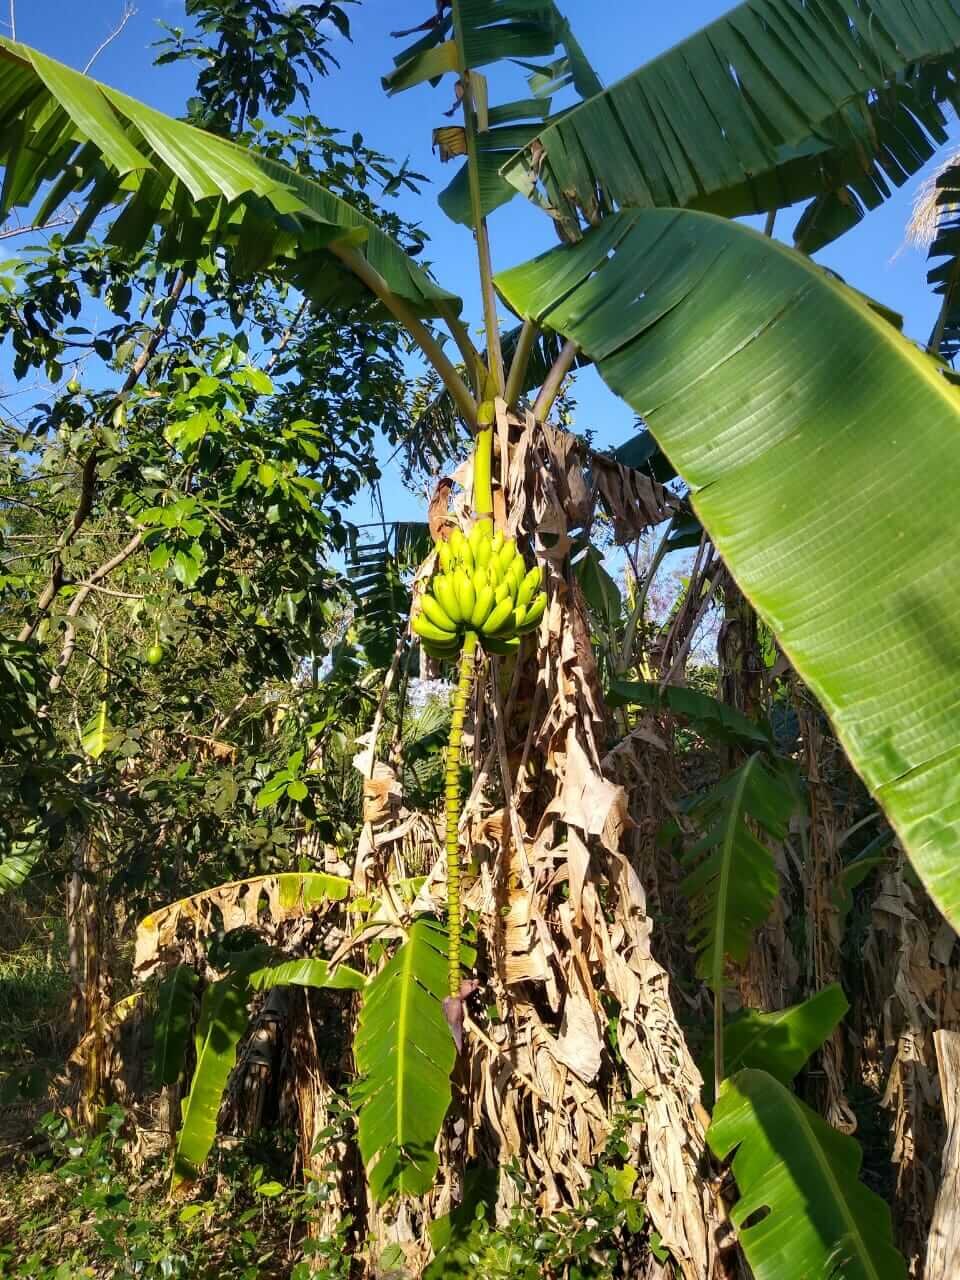 Banana tree ripe Central America - around selvista farm.jpg